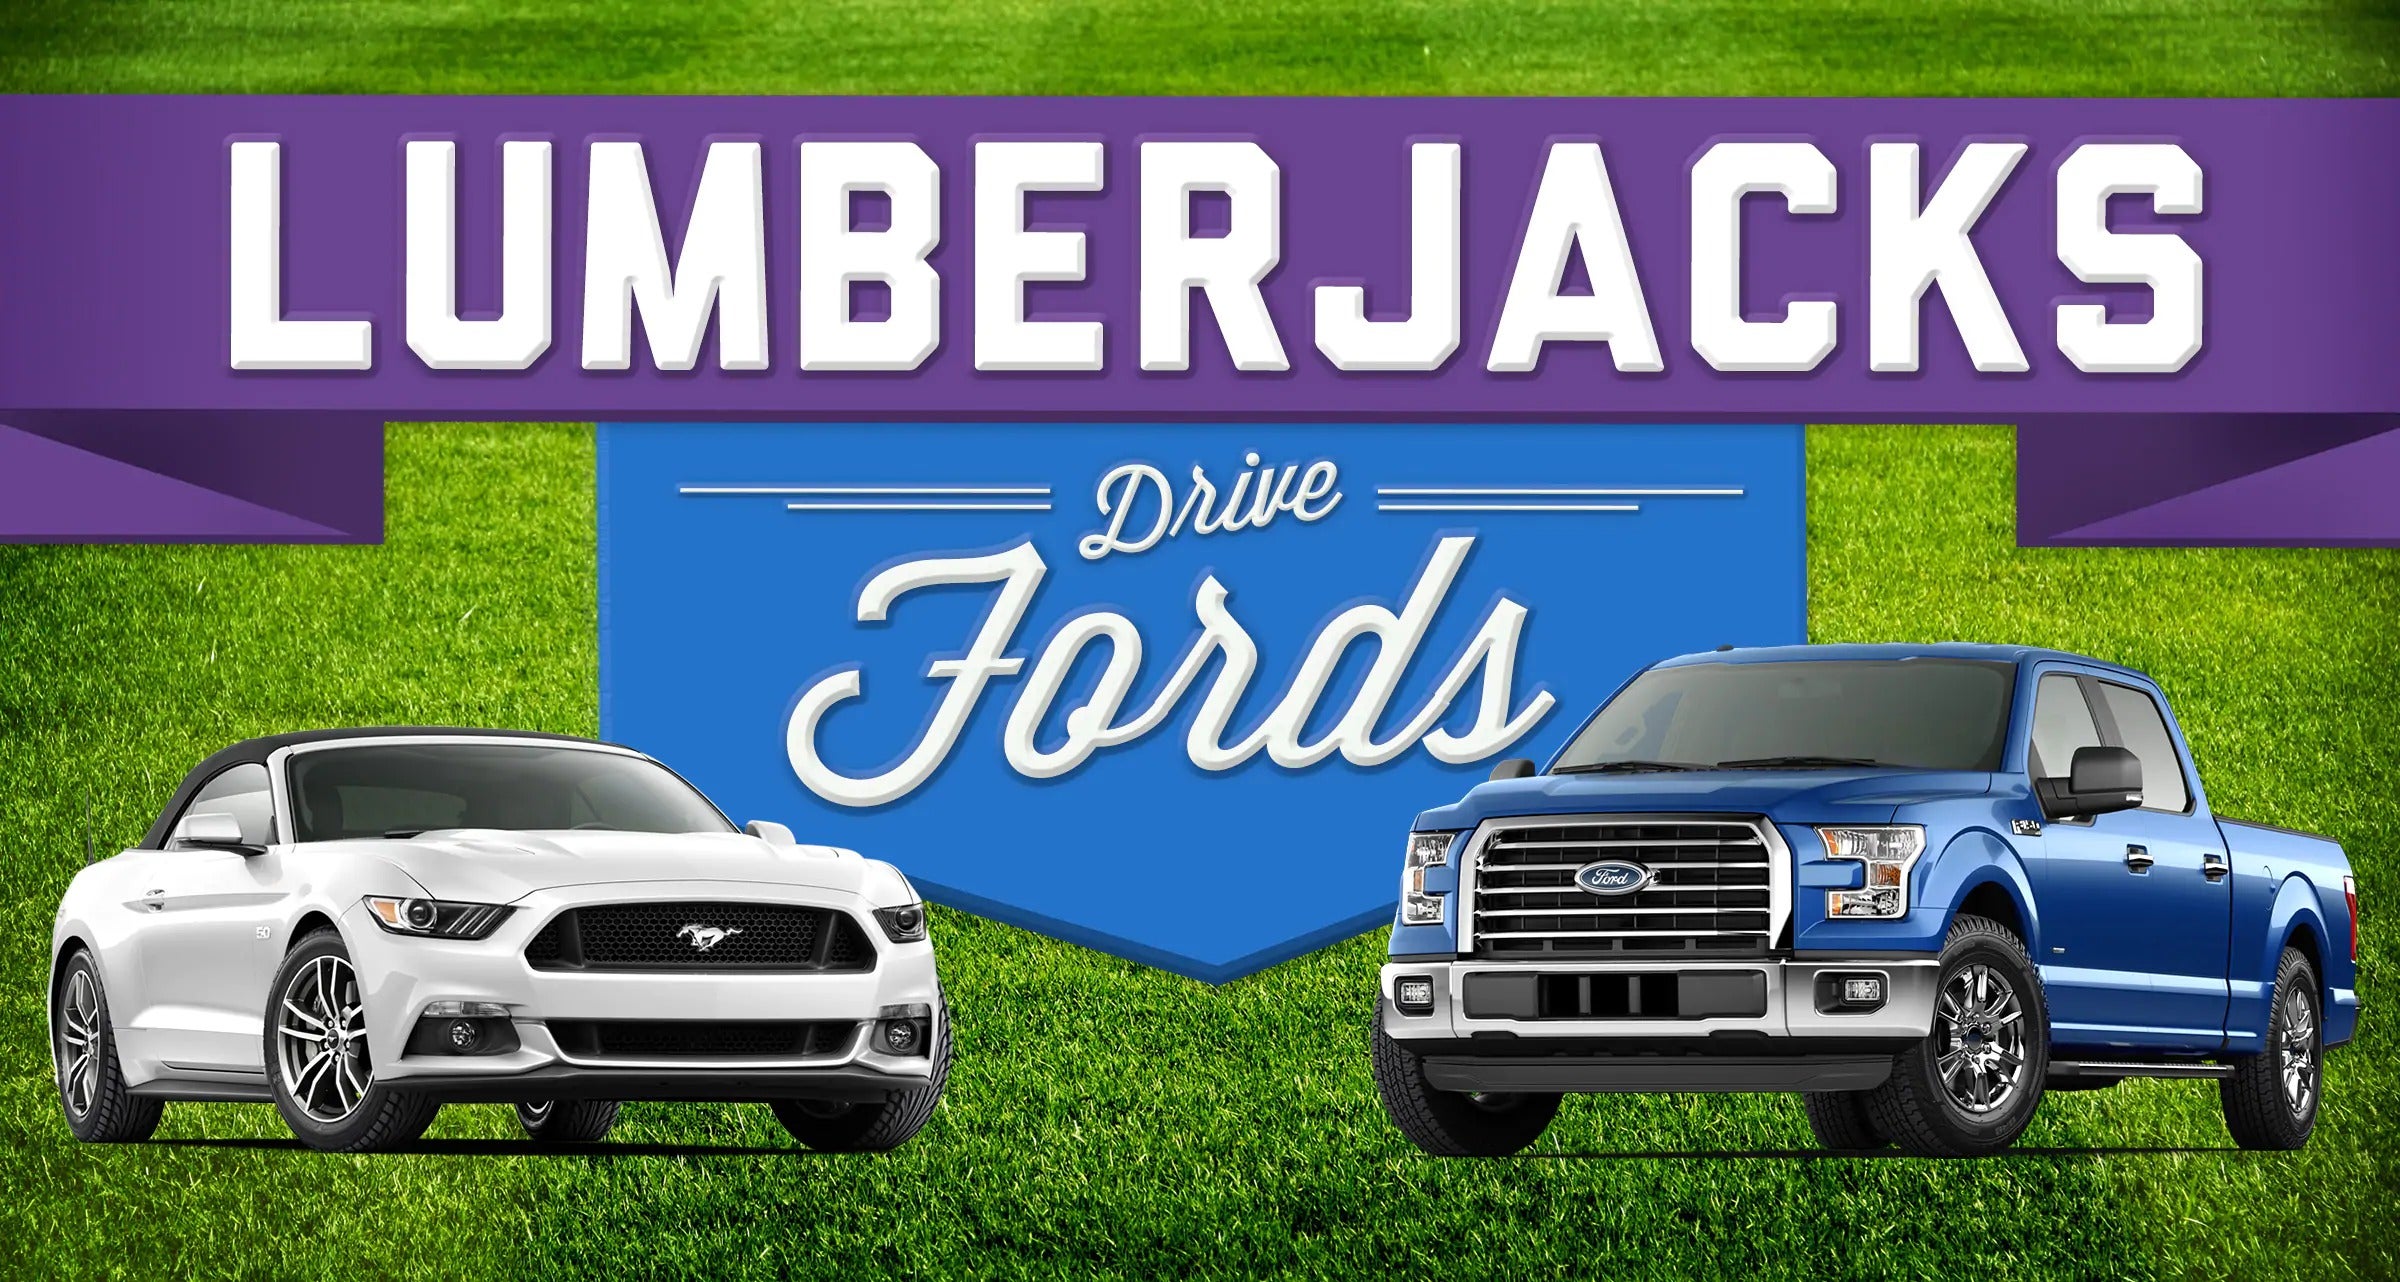 Lumberjacks Drive Fords